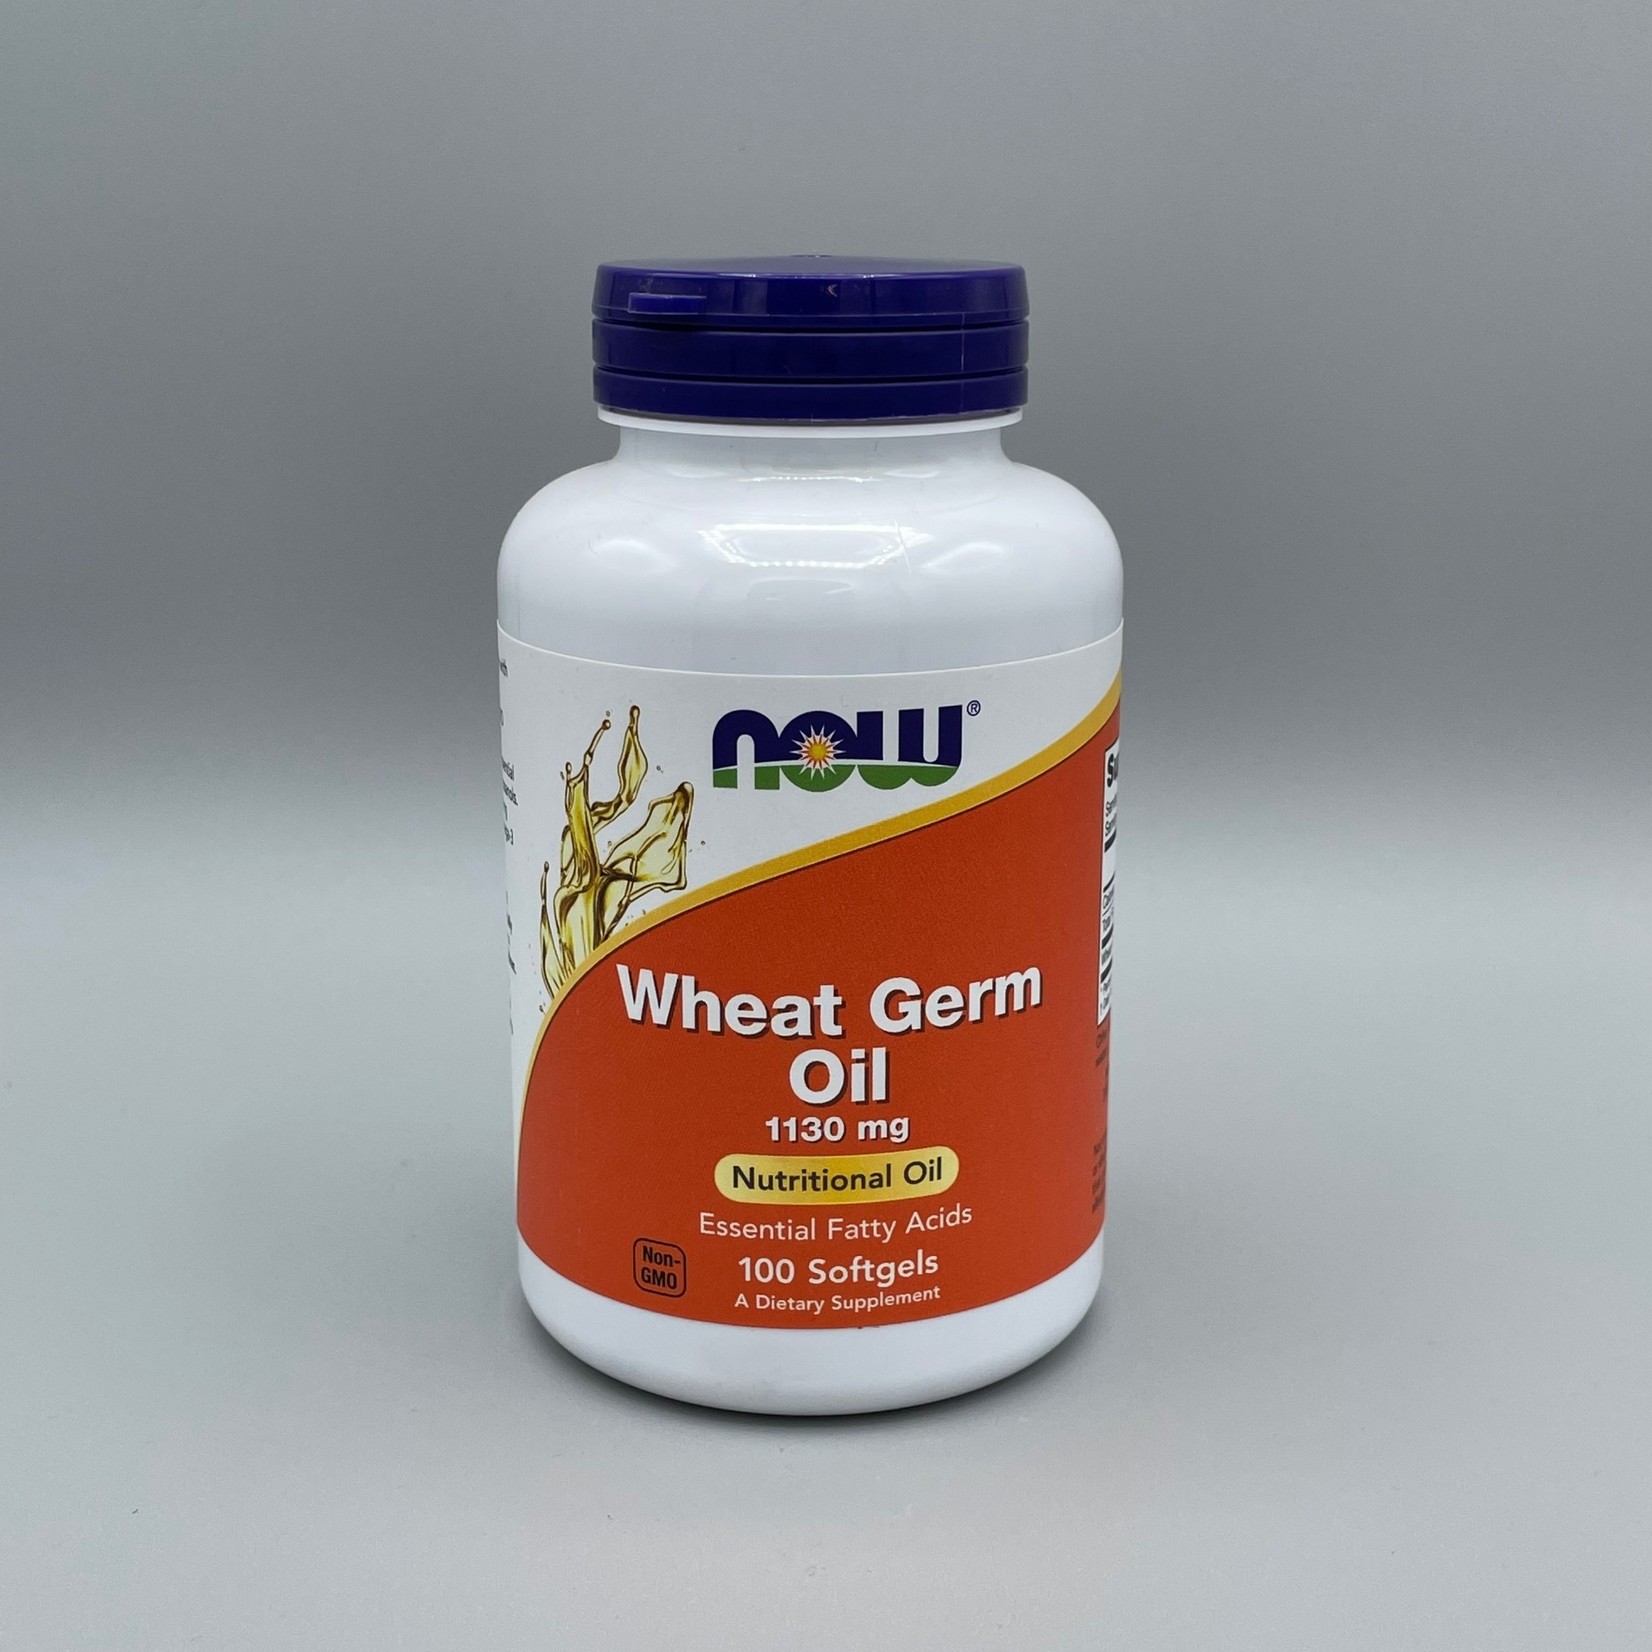 NOW Wheat Germ Oil (Essential Fatty Acids) - 1,130 mg, 100 Softgels